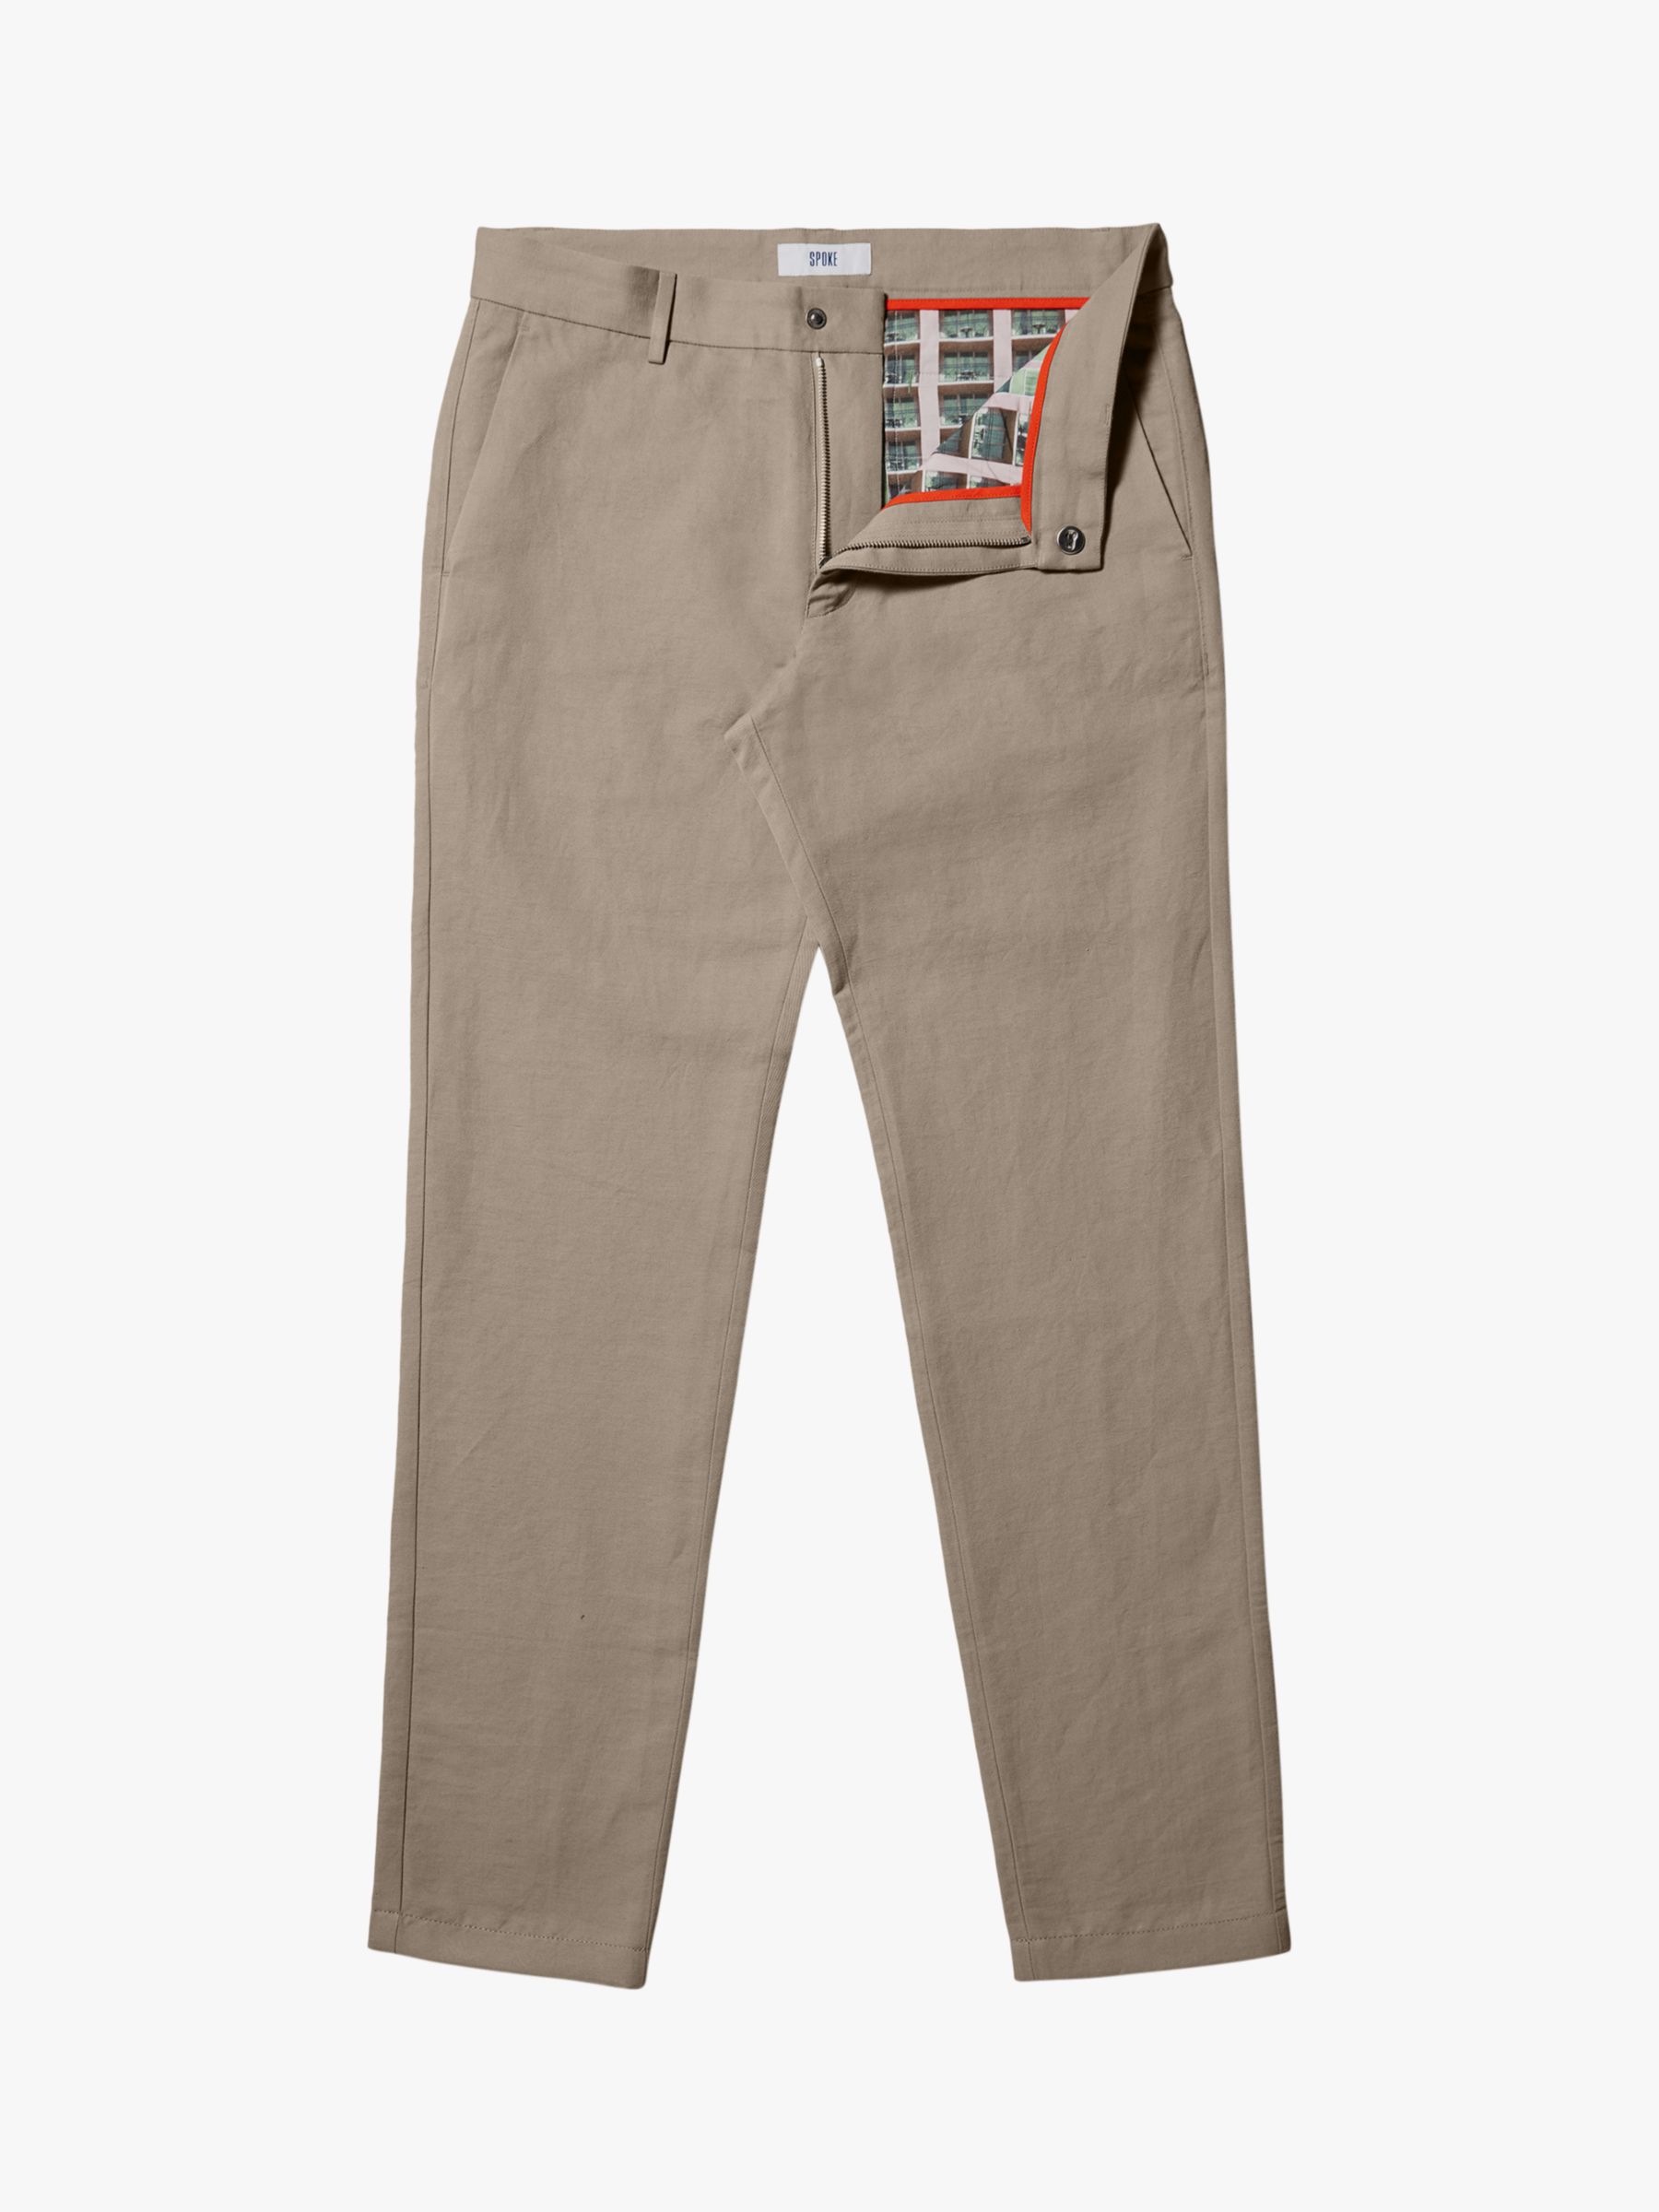 SPOKE Linen Sharps Broad Thigh Trousers, Hopsack, W30/L28